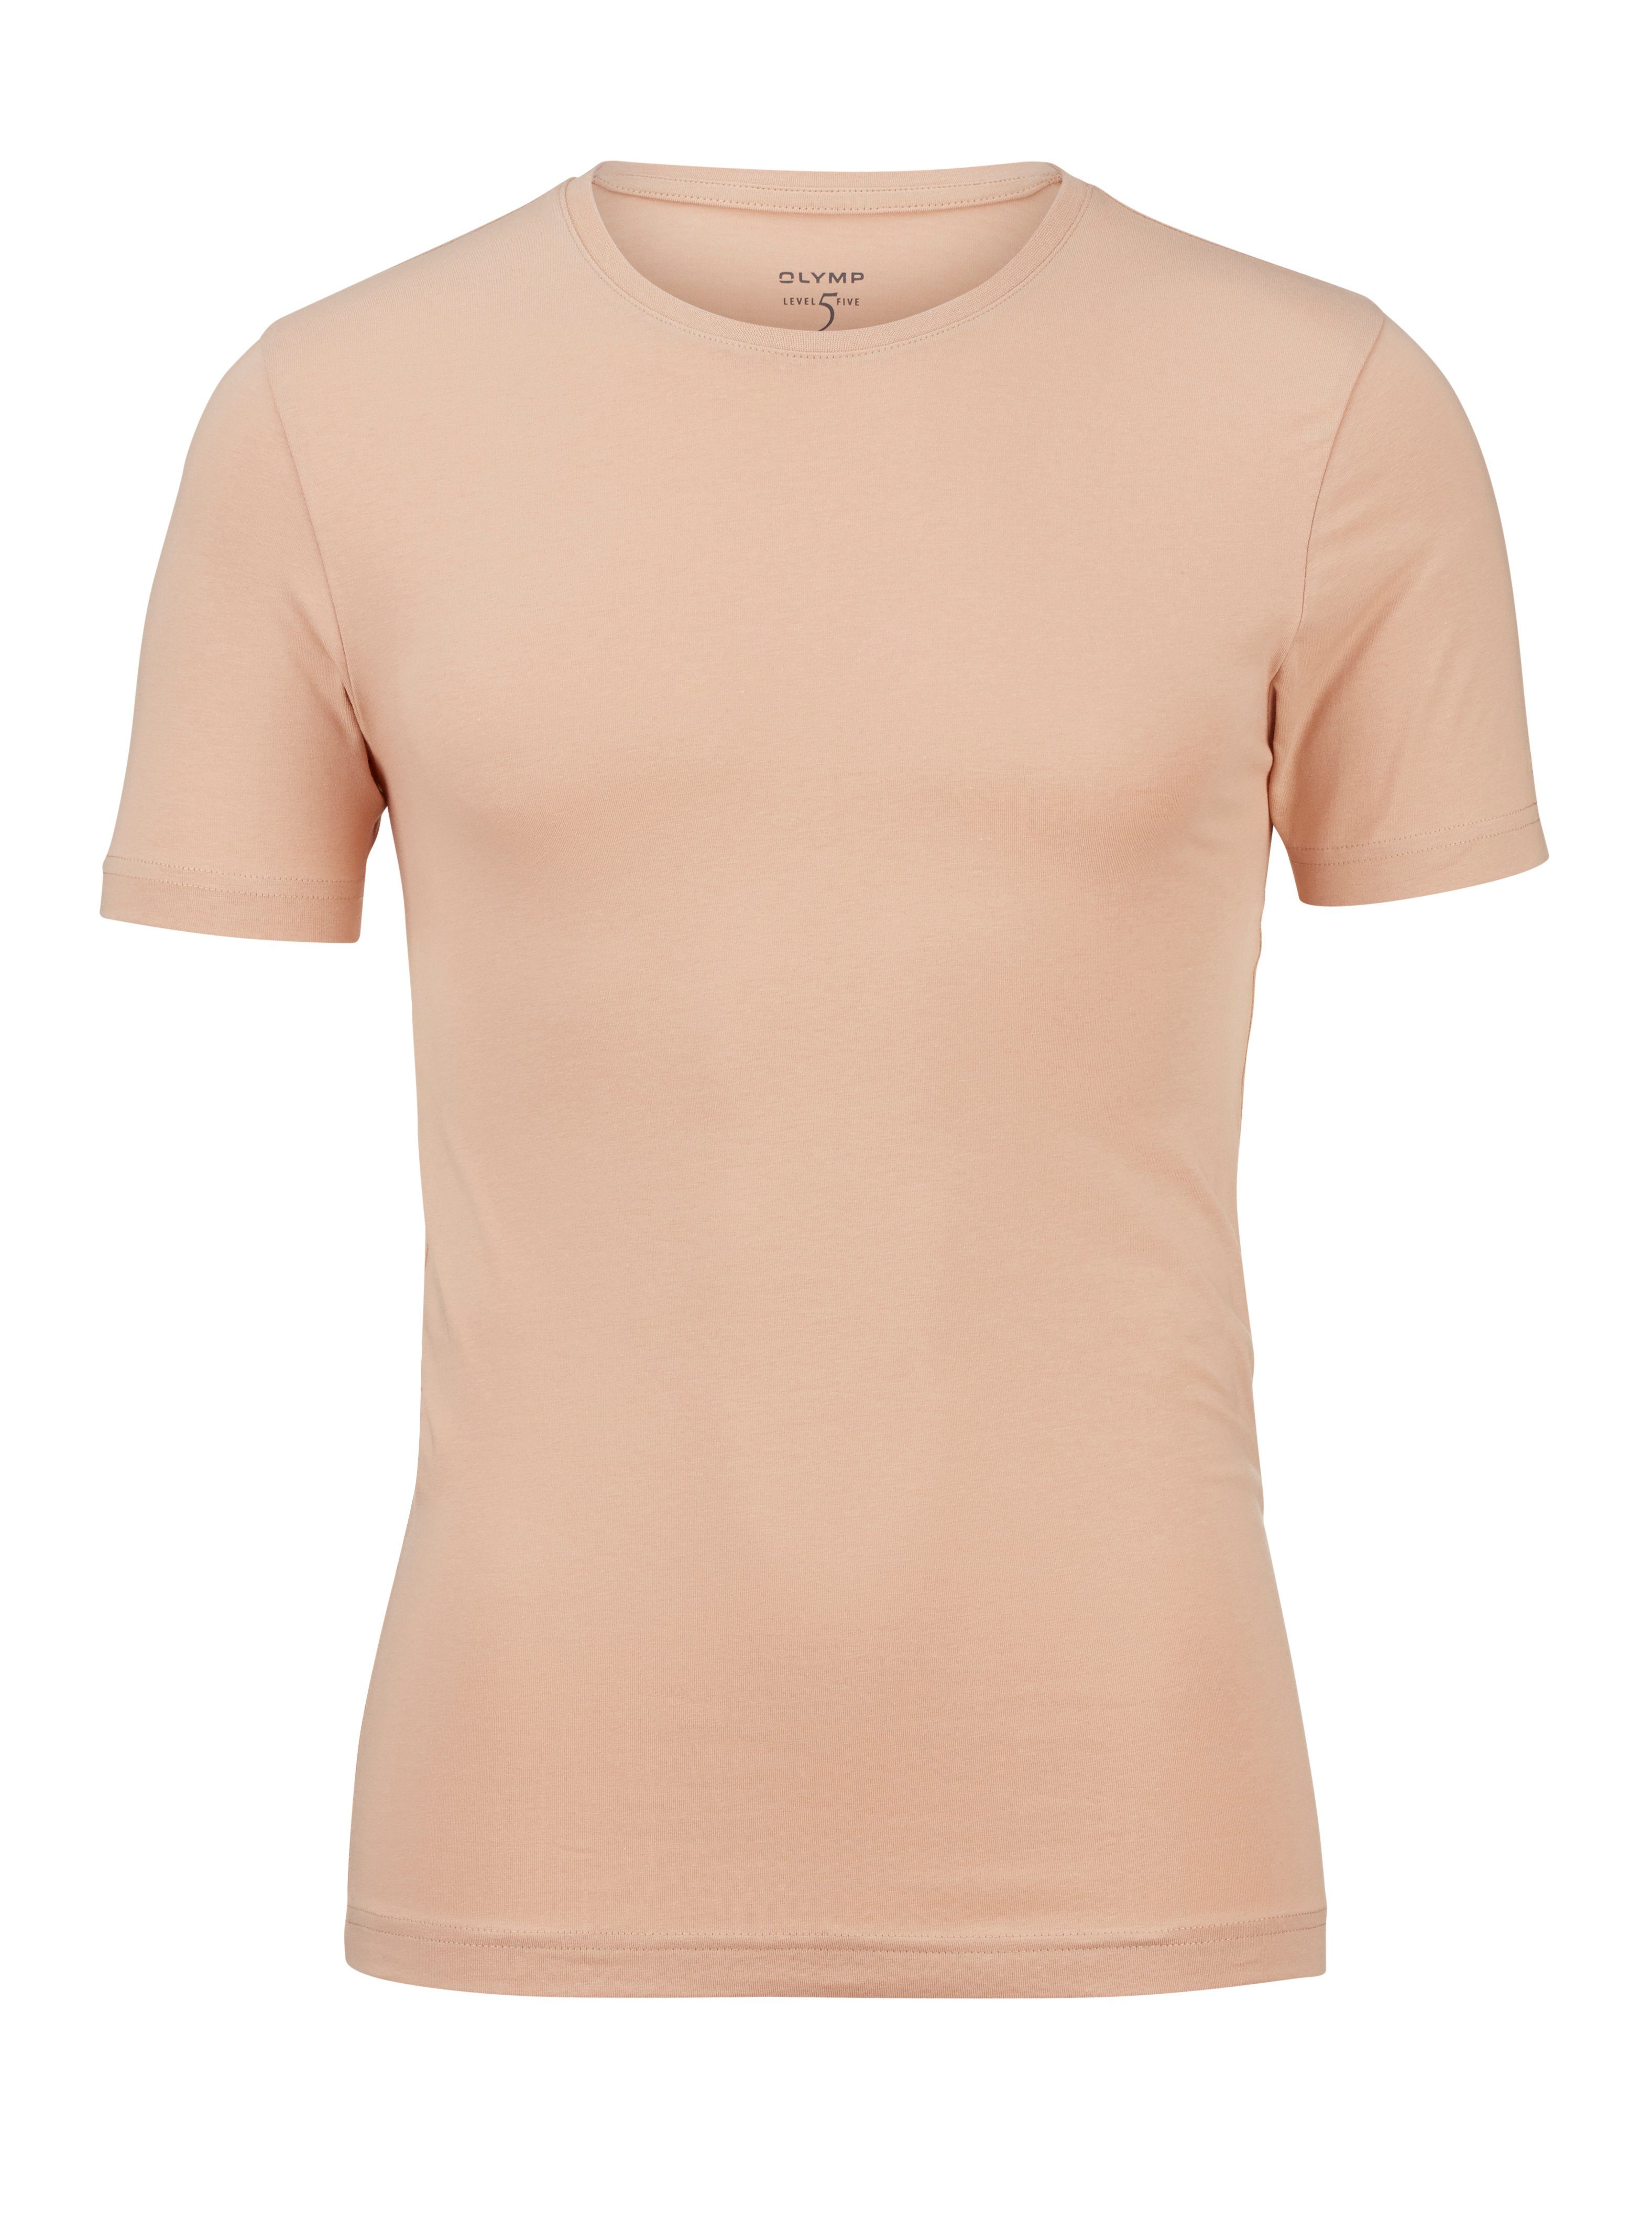 T-Shirt caramel body fit Level 5 OLYMP